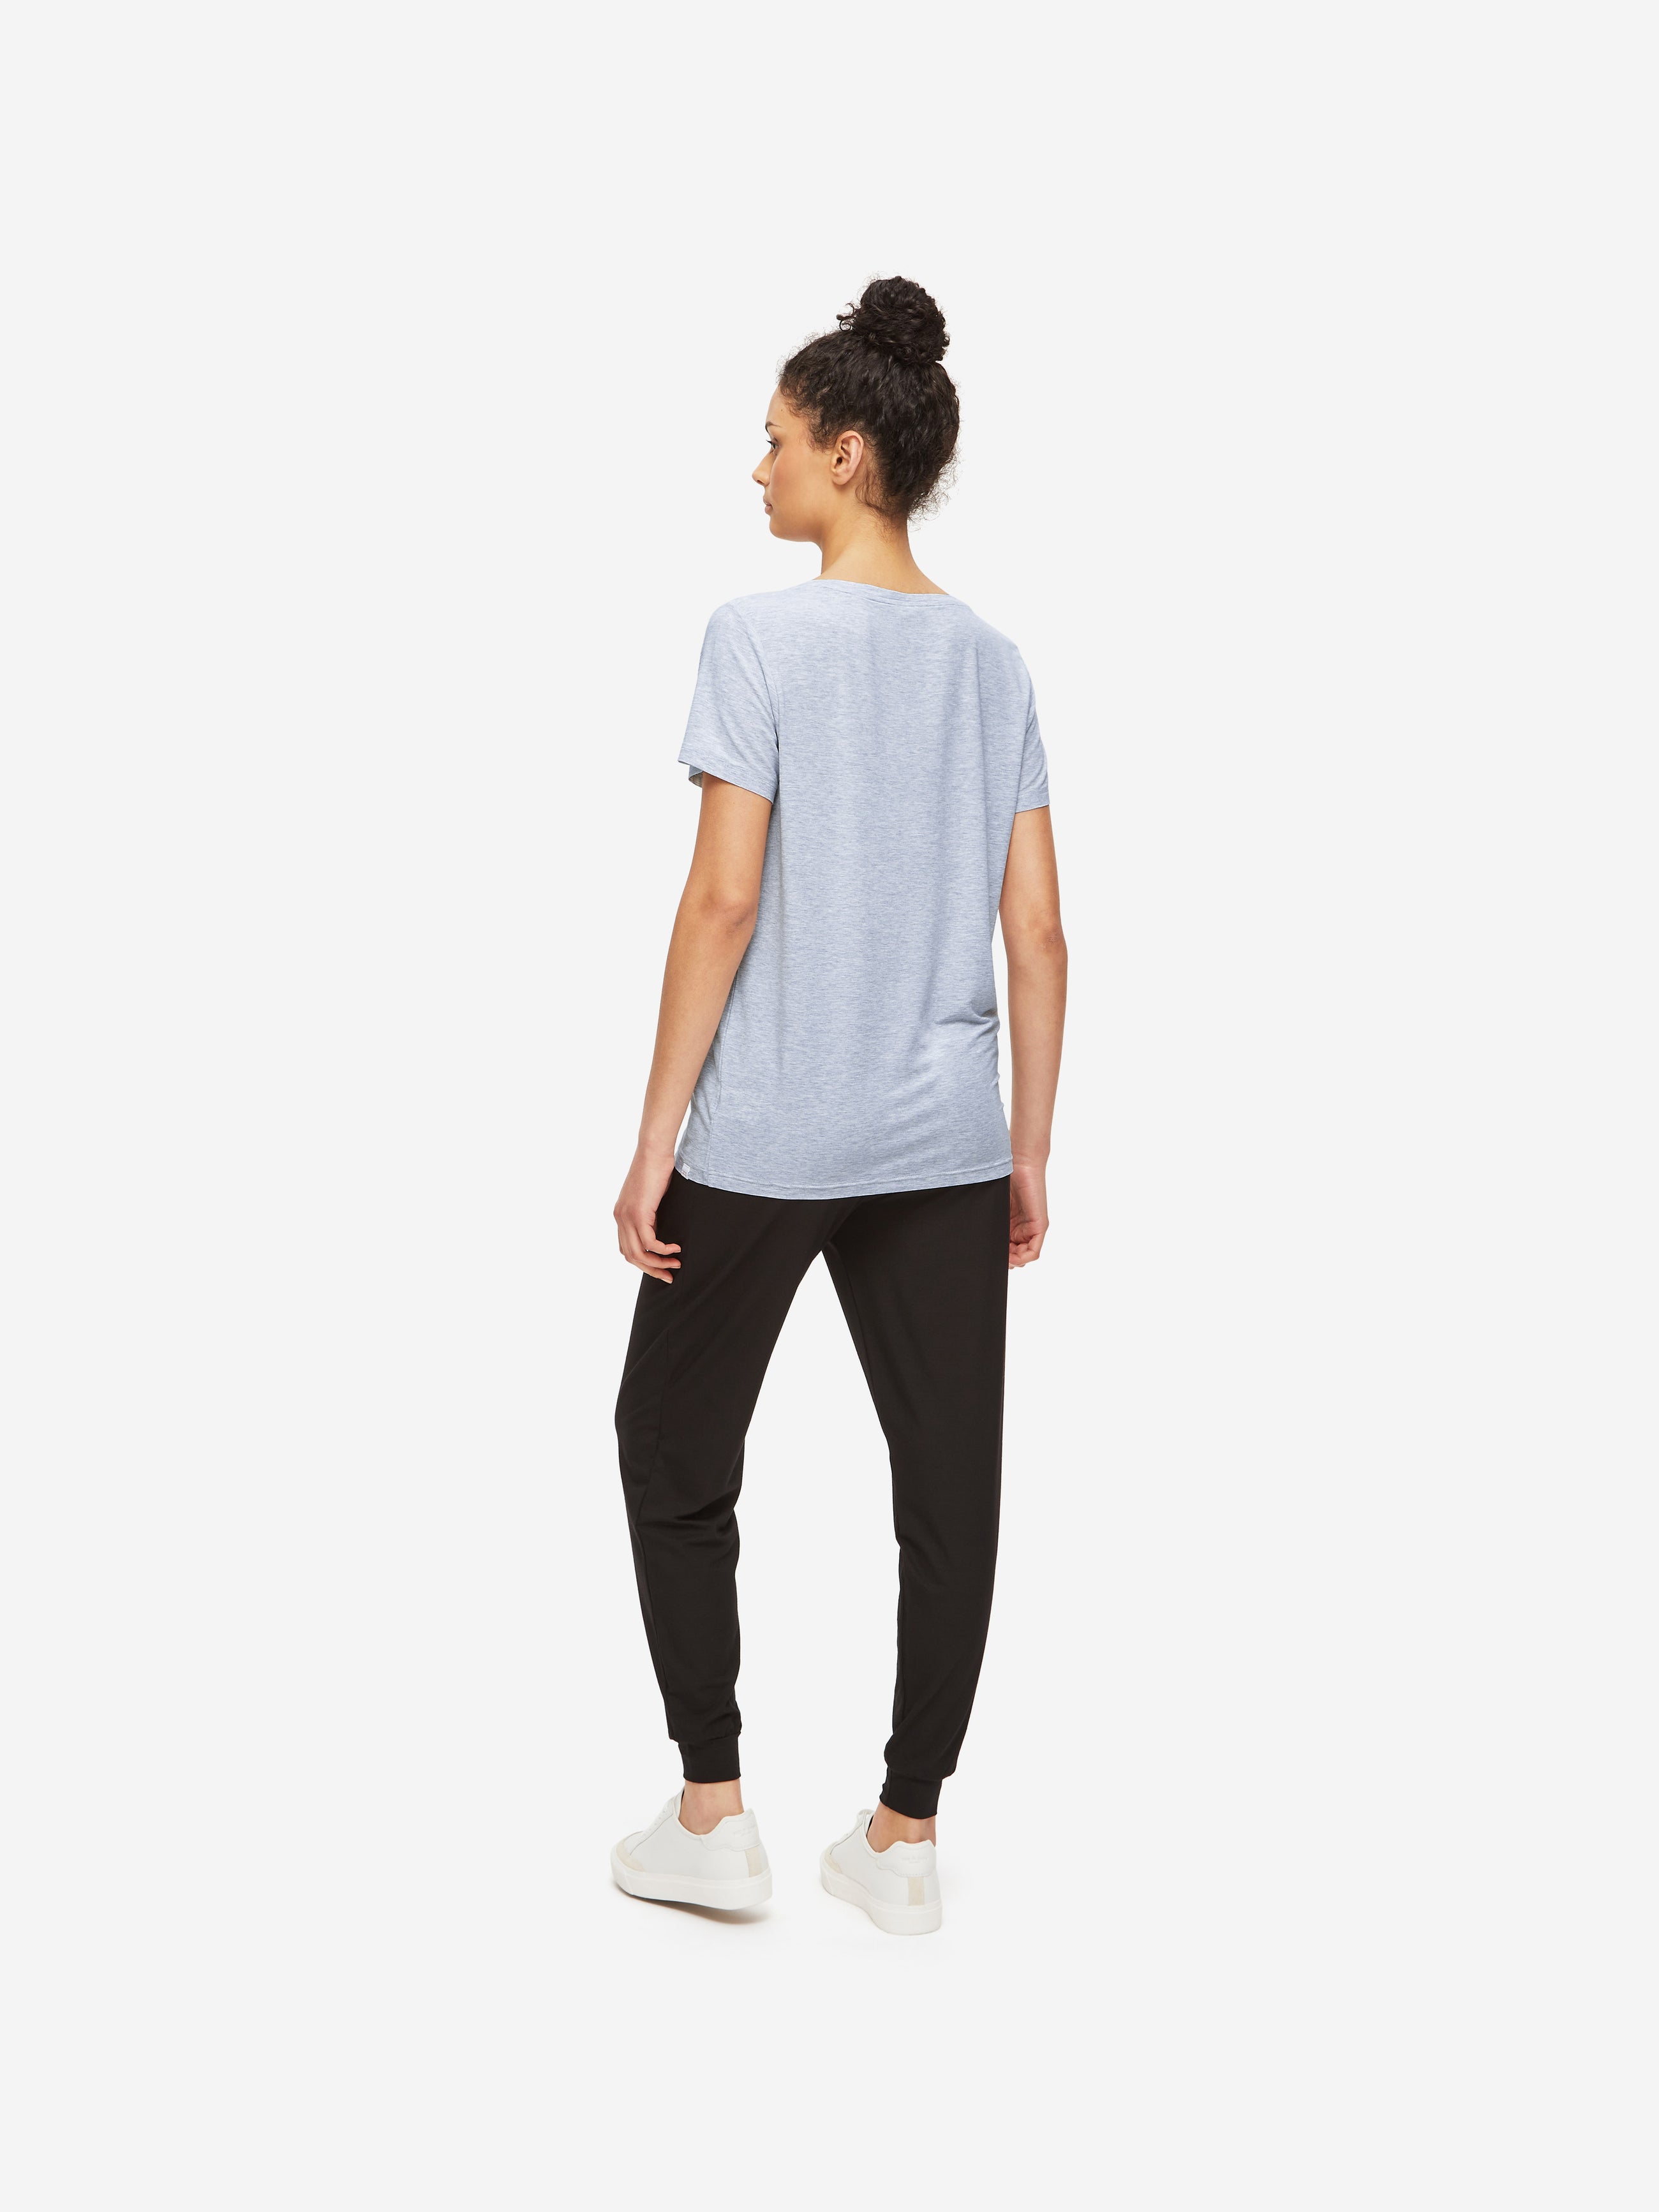 Women's T-Shirt Ethan Micro Modal Stretch Light Blue Marl